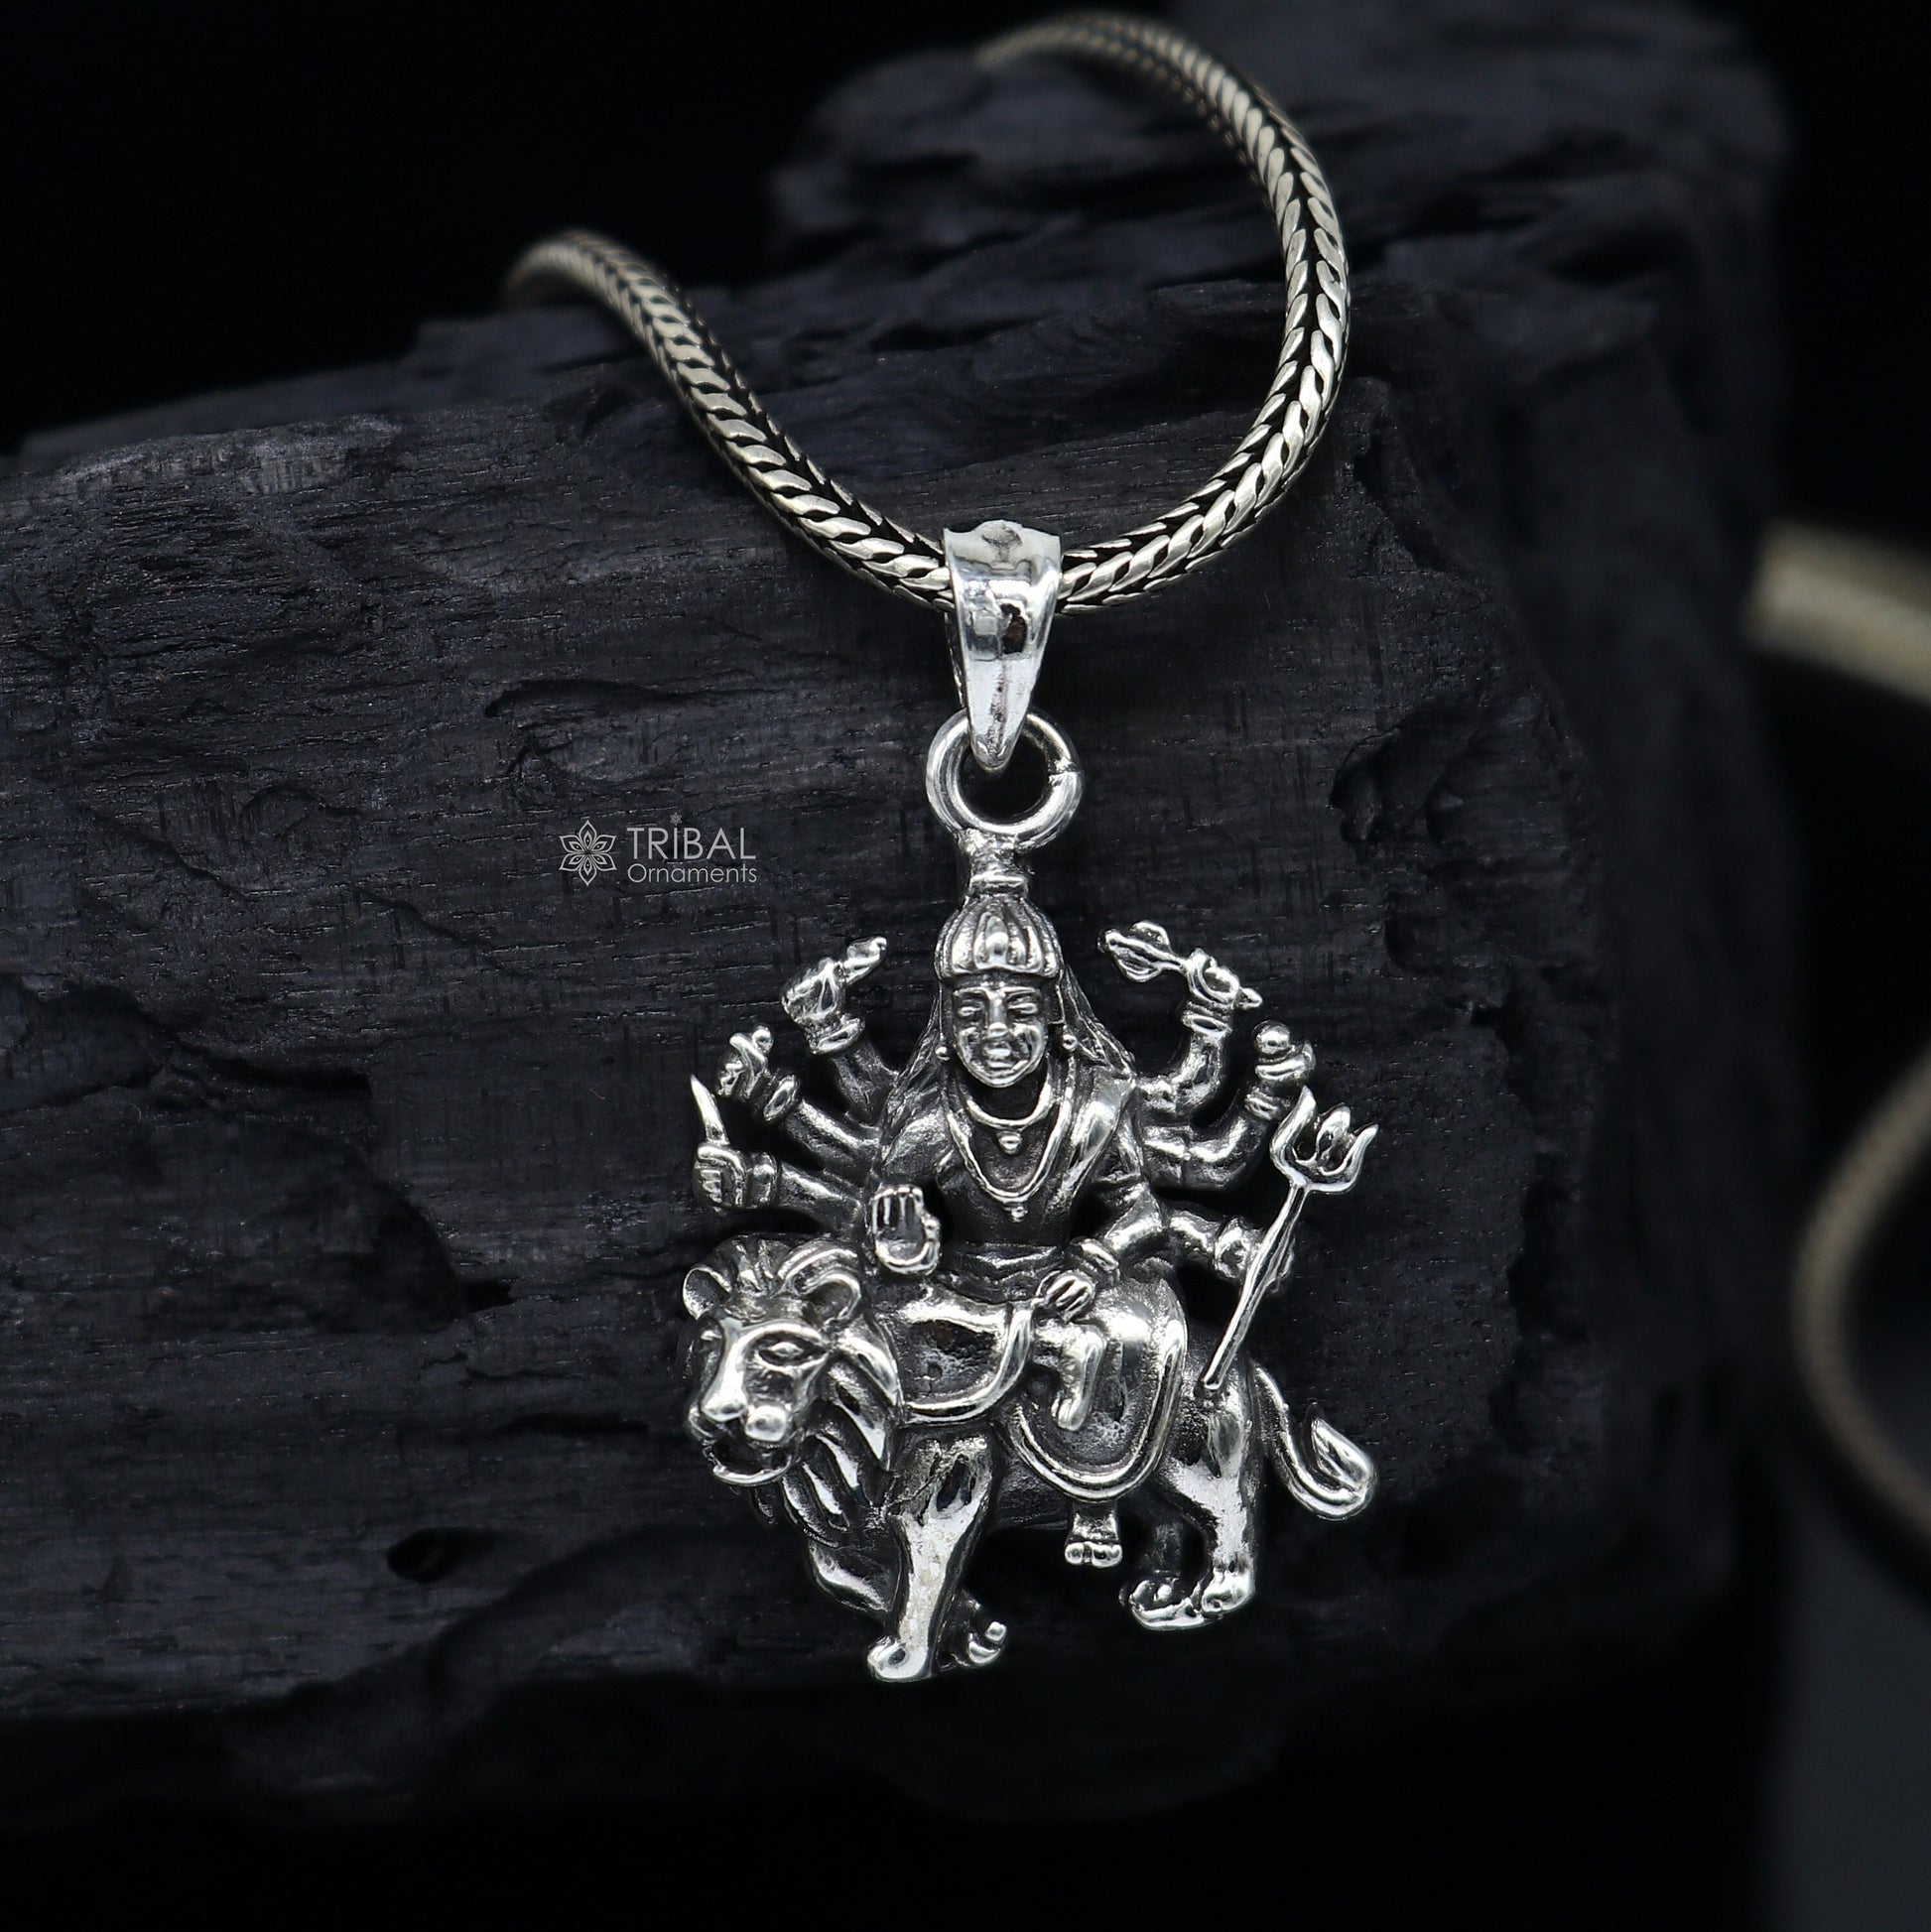 Divine 925 sterling silver Goddess bhawani/ Durga mataji with lion pendant, amazing unisex pendant locket goddess tribal jewelry nsp743 - TRIBAL ORNAMENTS